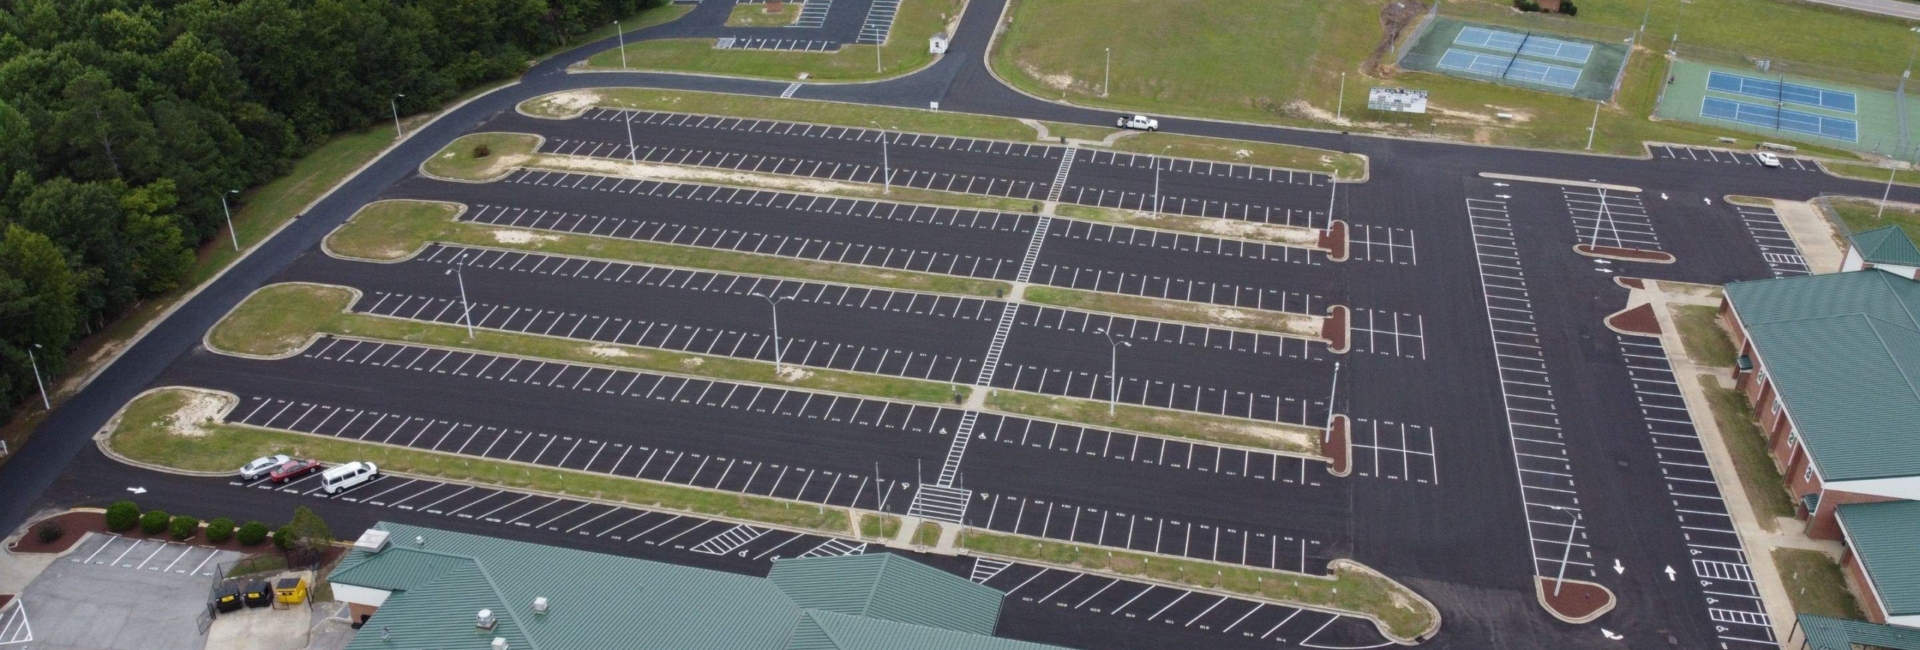 South Johnston High School parking lot in Four Oaks, North Carolina